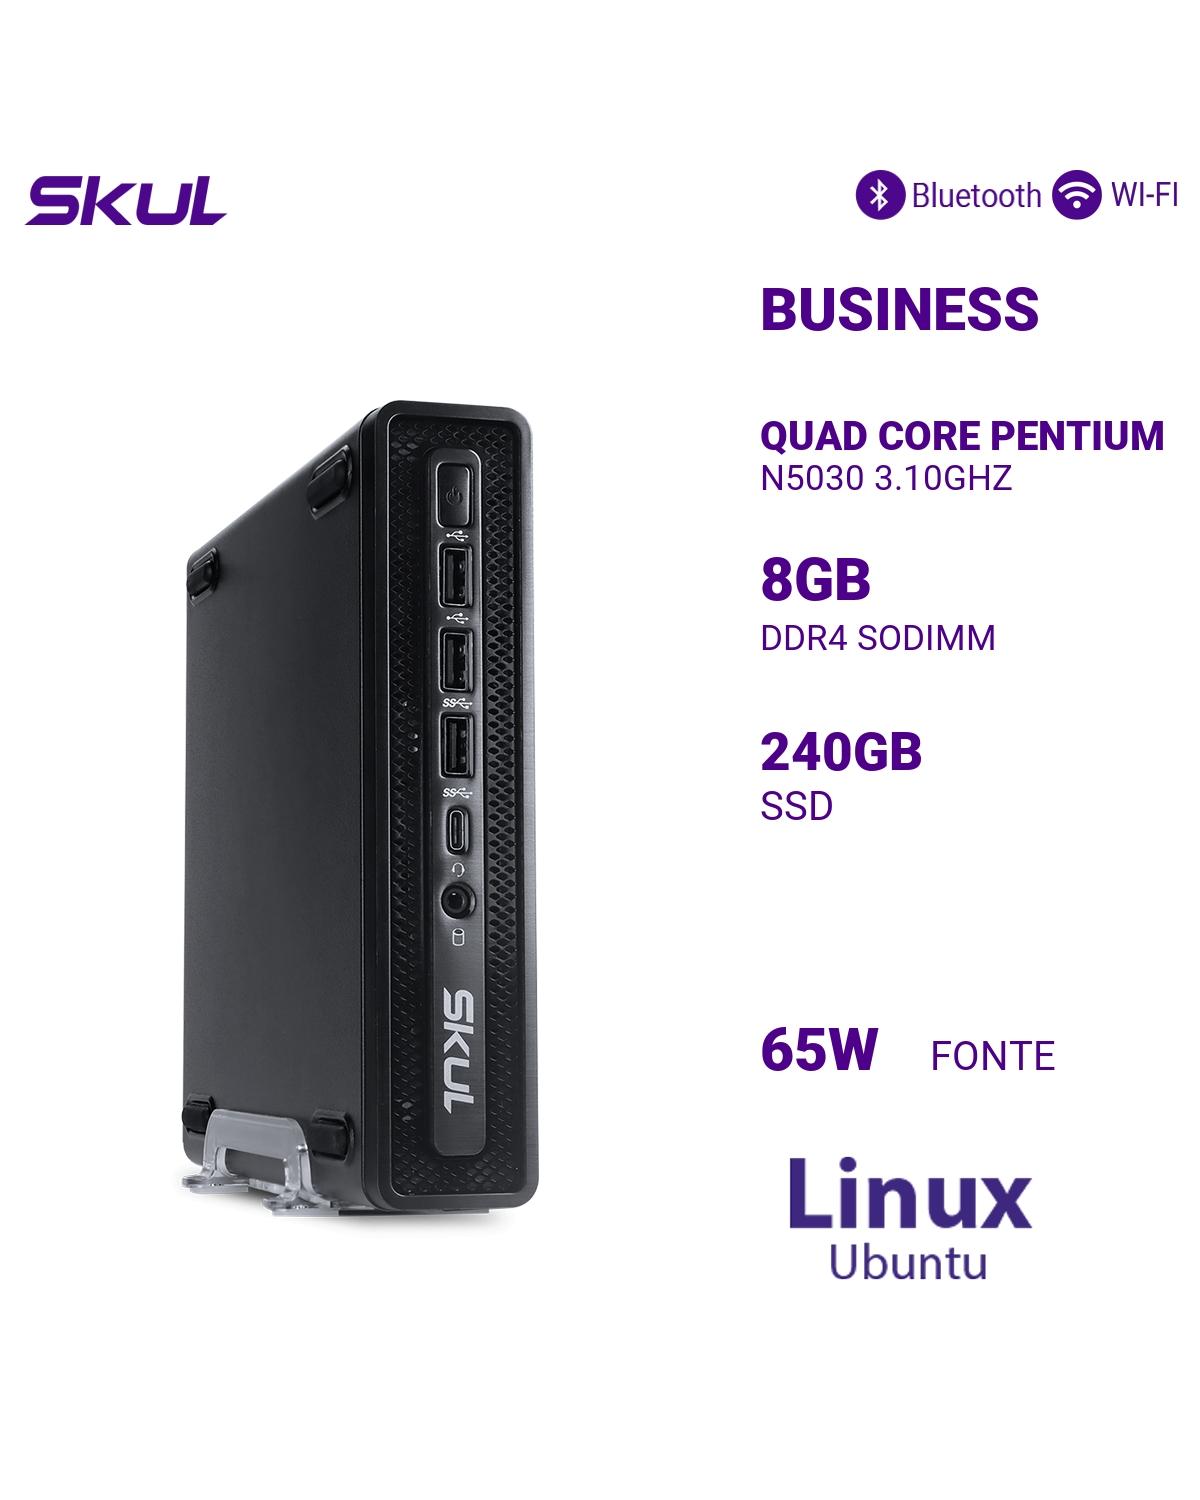 MINI COMPUTADOR BUSINESS B200 QUAD CORE PENTIUM  N5030 3.10GHZ MEM 8GB DDR4 SSD 240GB FONTE 60W EXTERNA LINUX UBUNTU